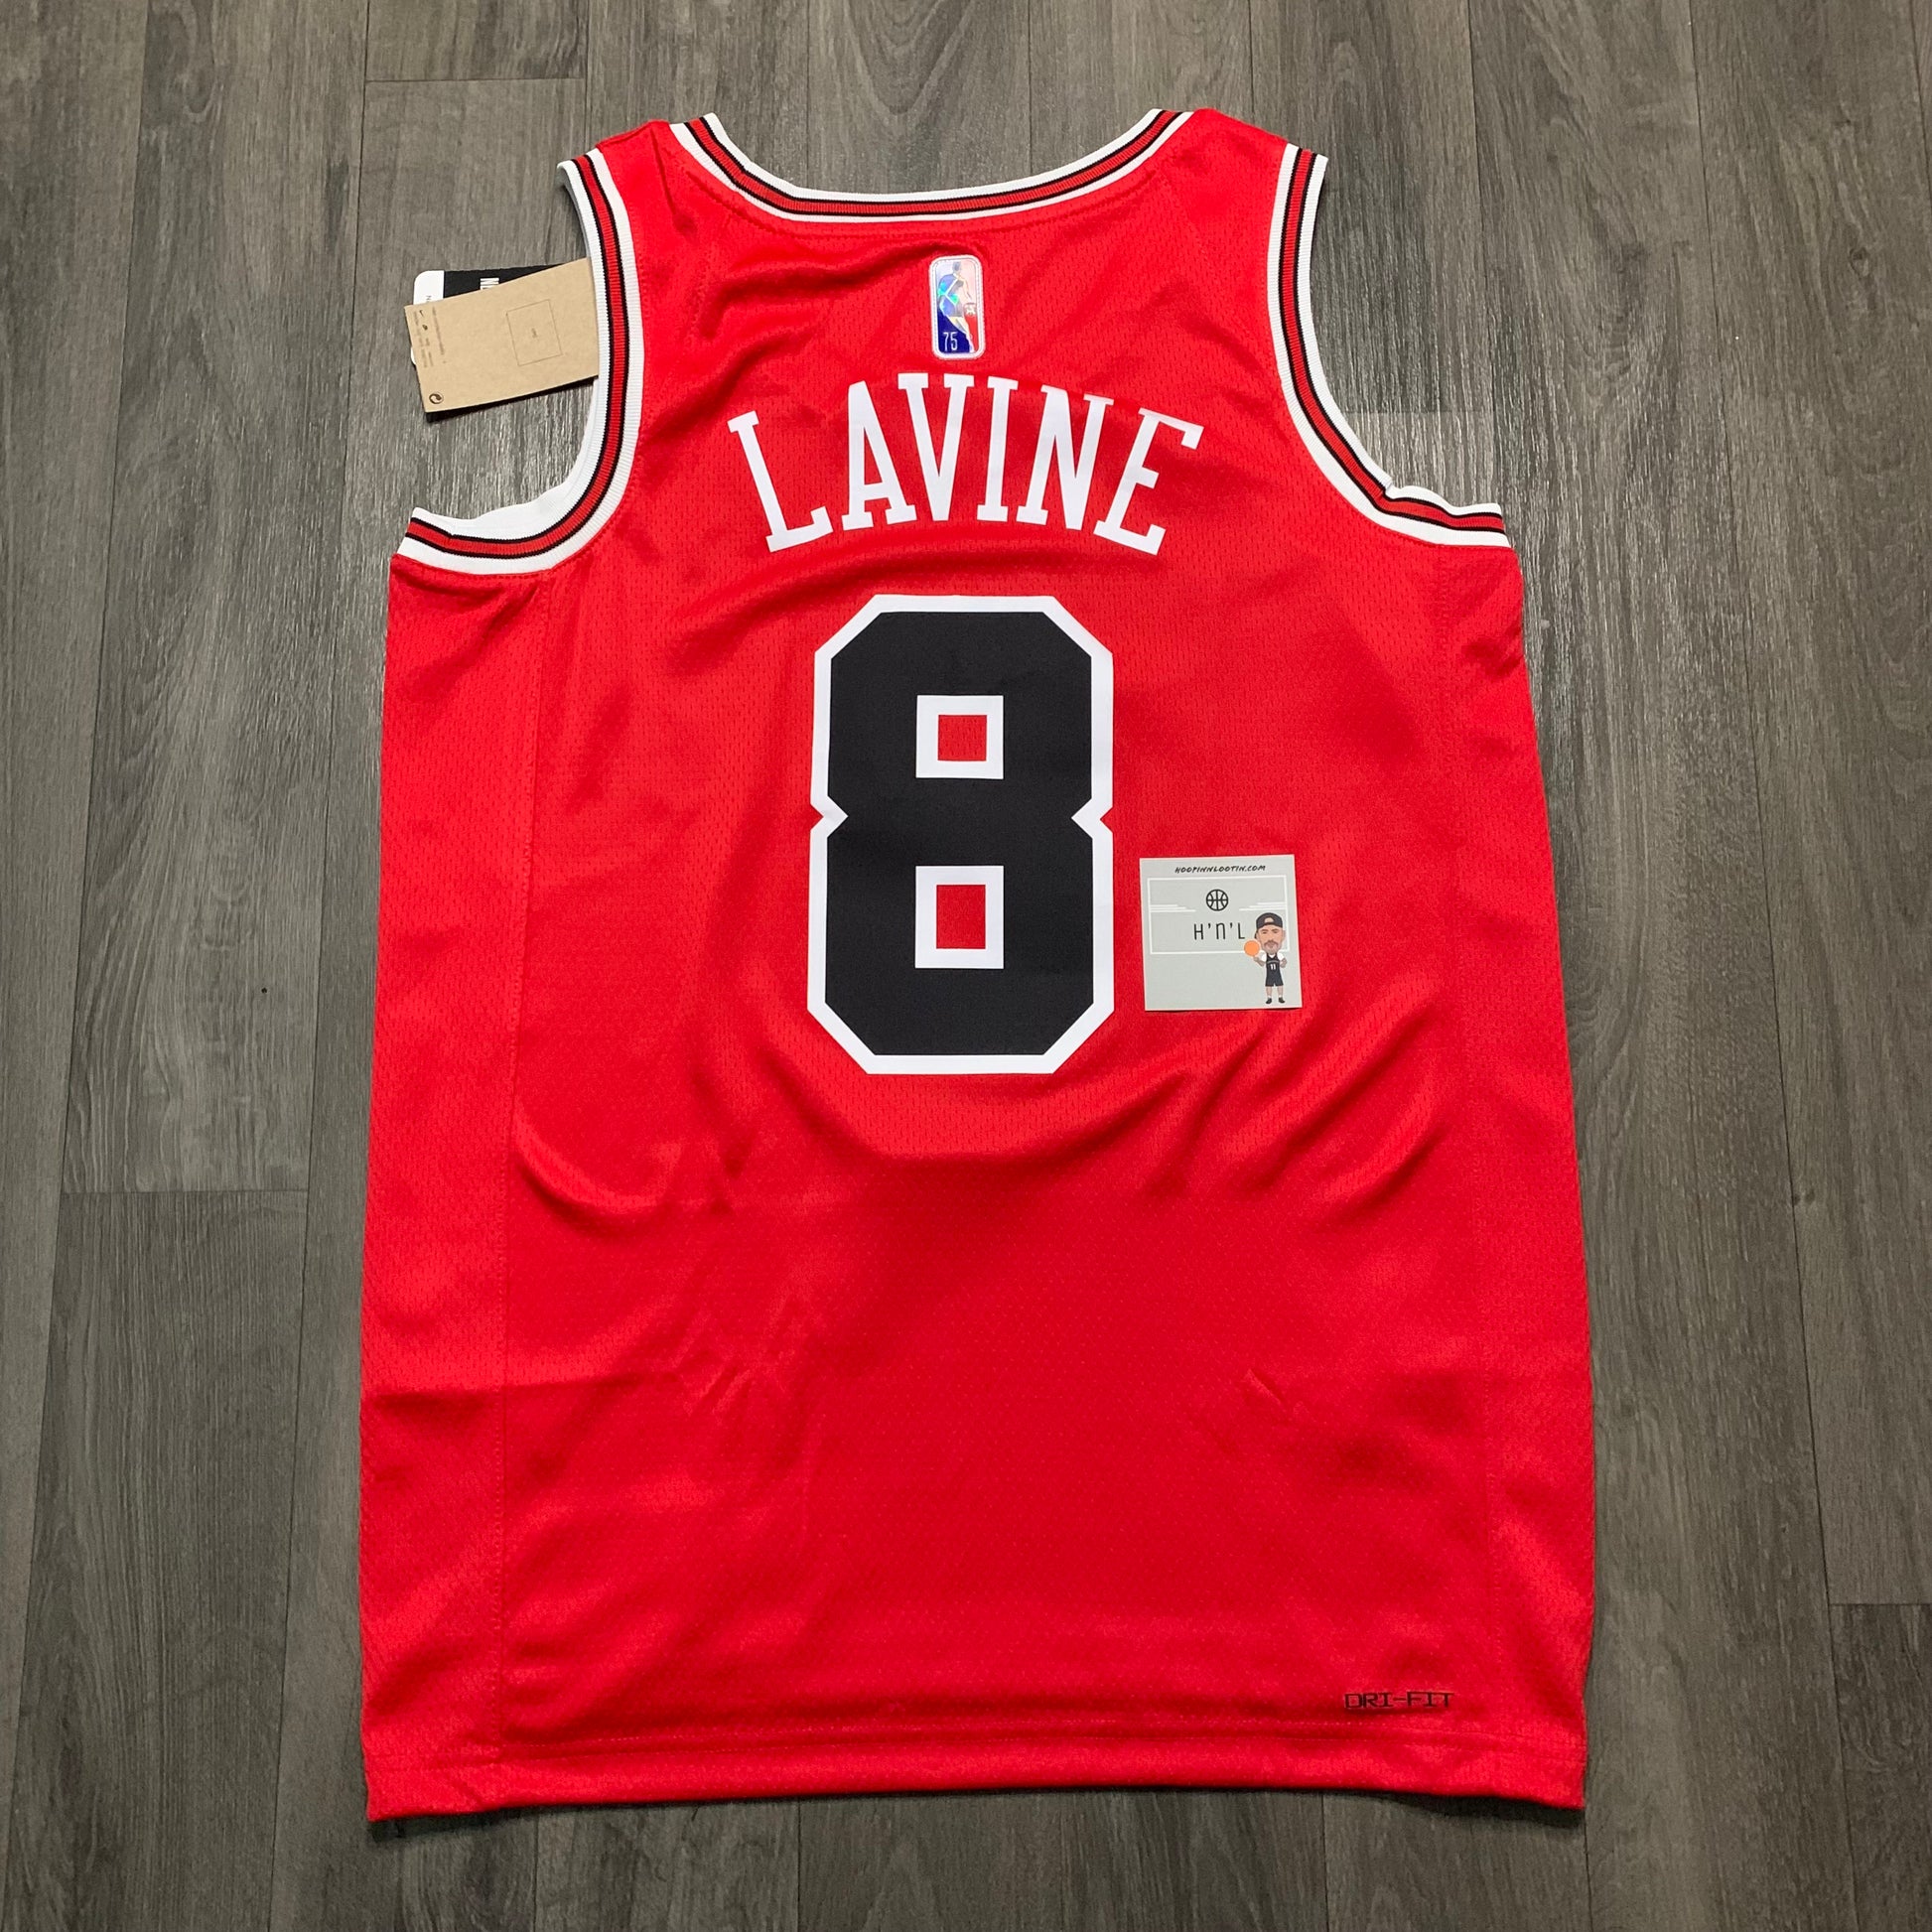 Zach LaVine Chicago Bulls Icon Edition Swingman Jersey - Red - Throwback